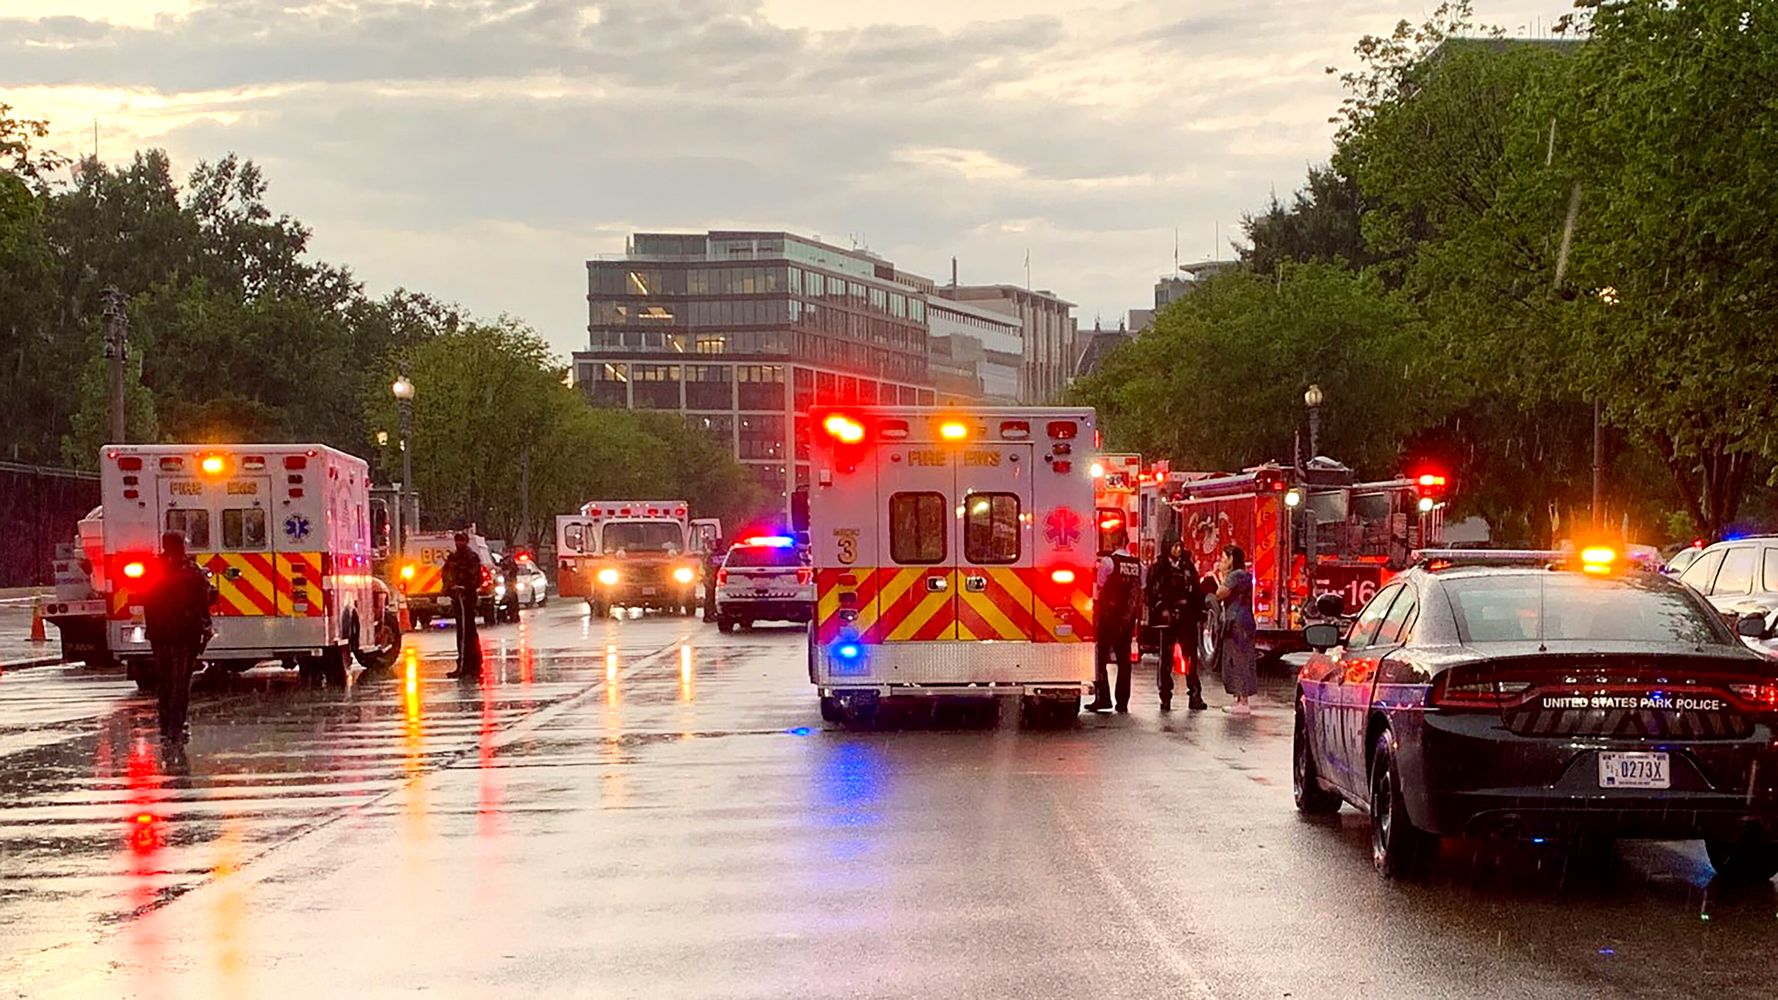 3 People Dead, 1 Injured After Lightning Strike Near White House